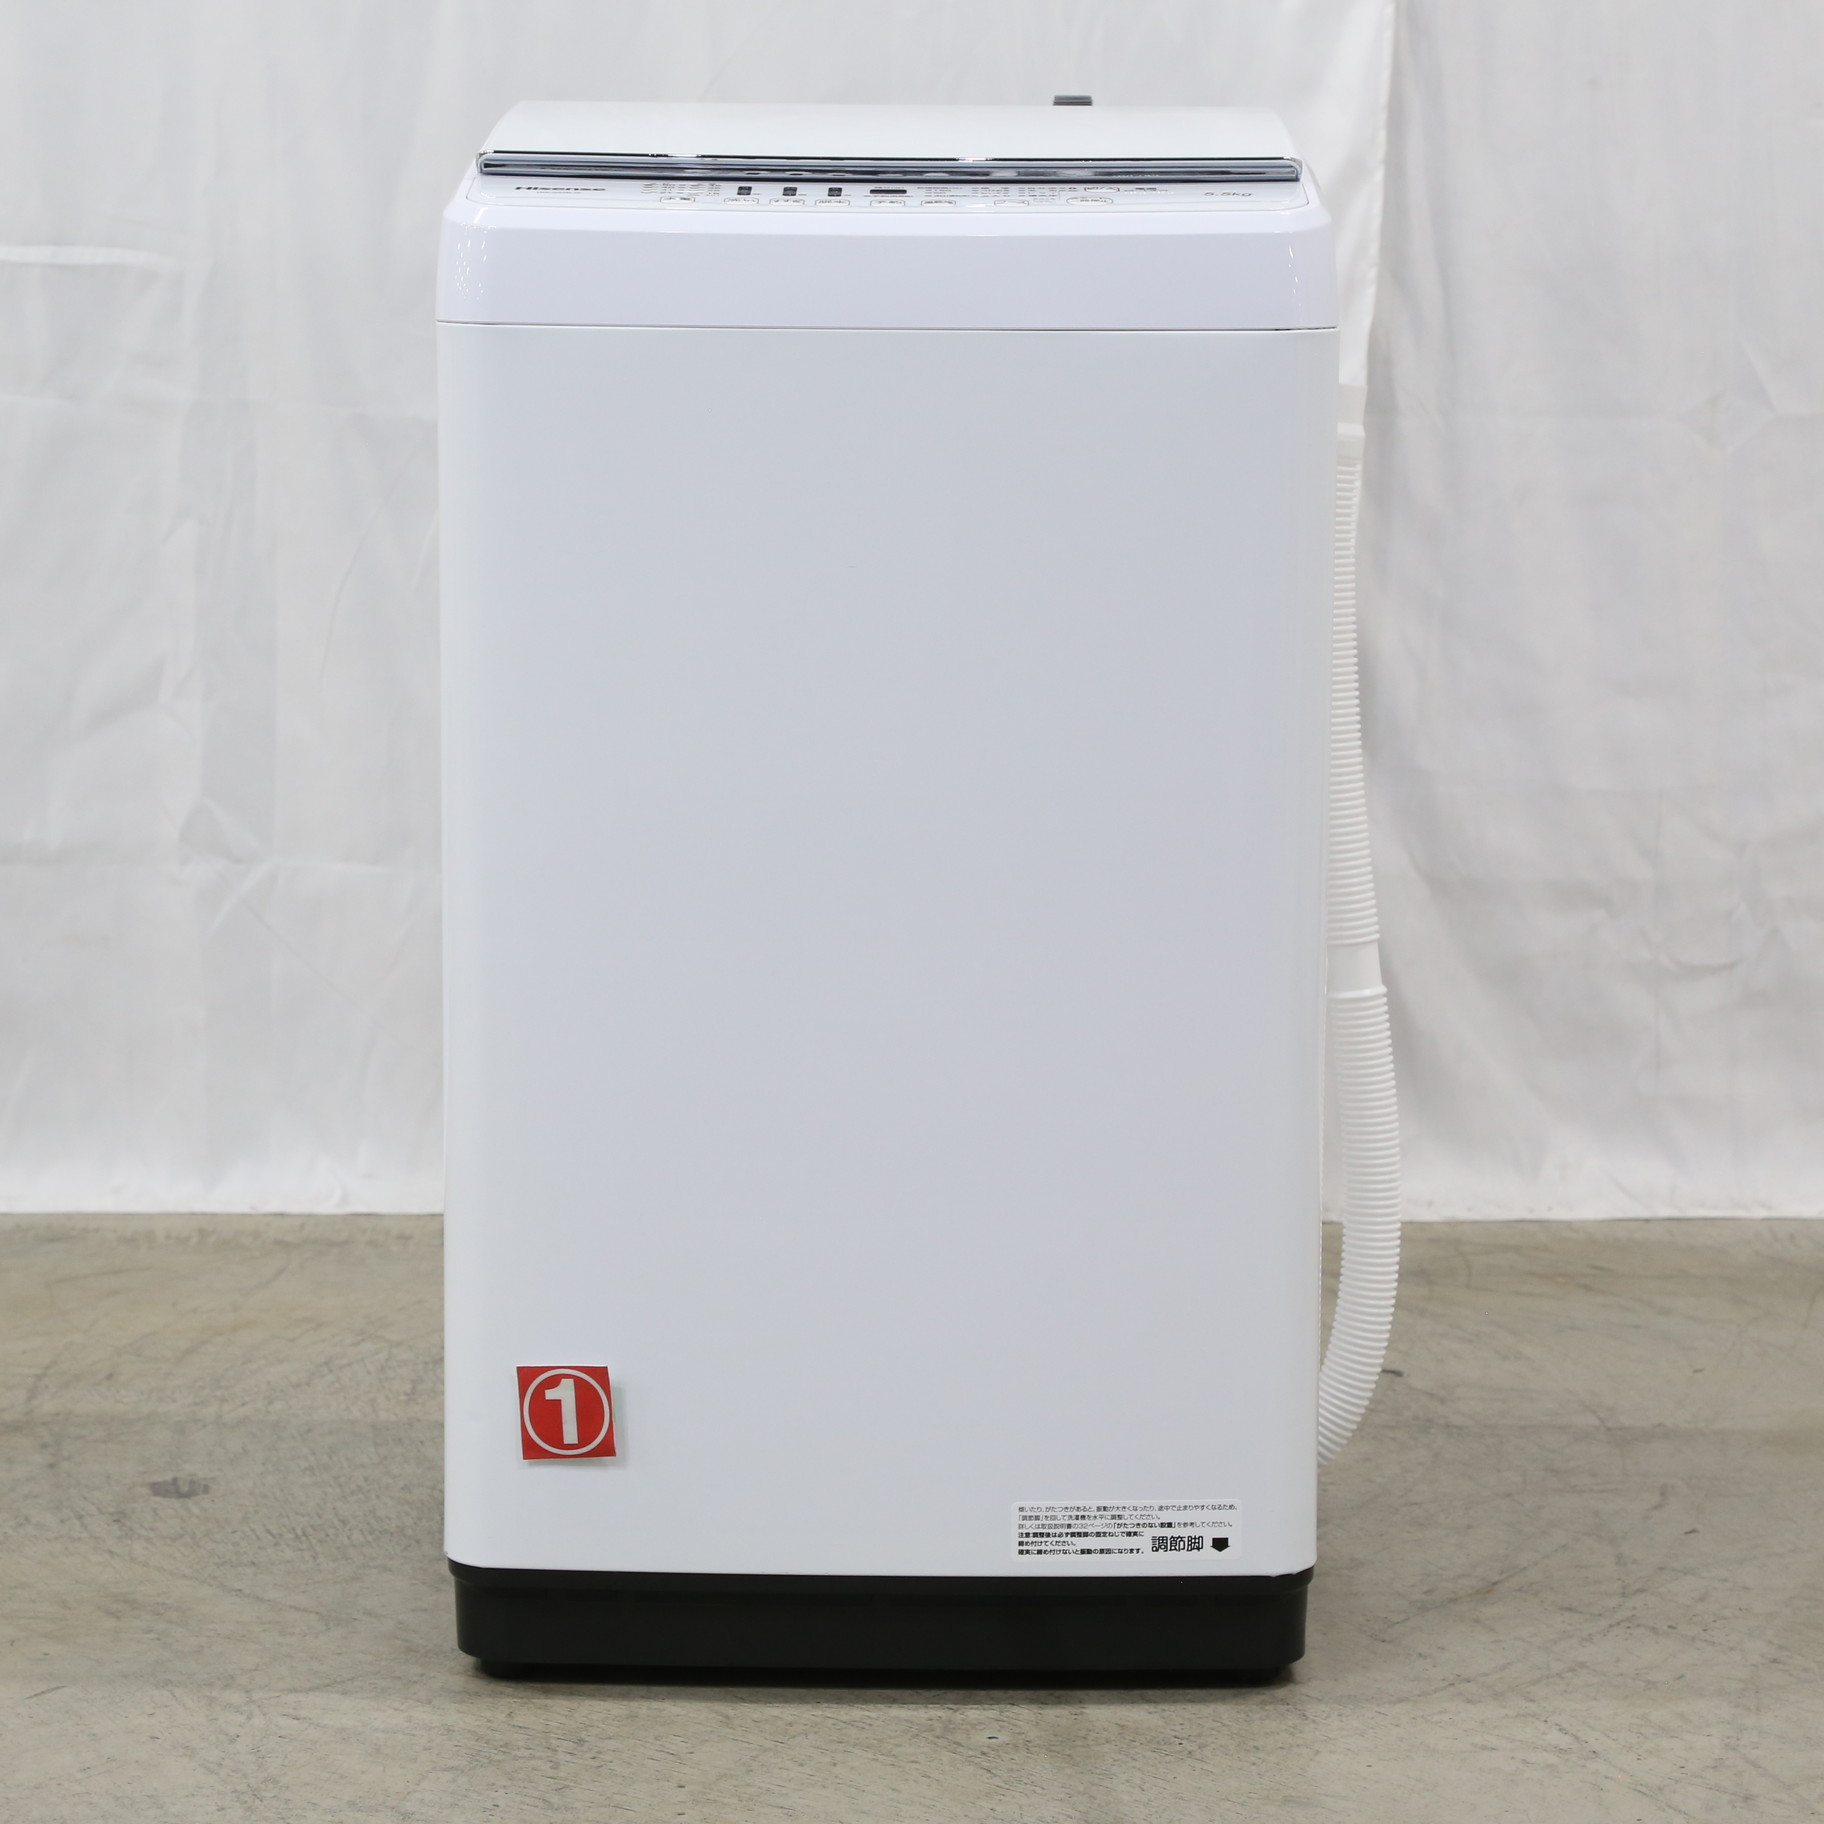 Hisense(ハイセンス) 全自動洗濯機 ホワイト HW-G55B-W - 洗濯機